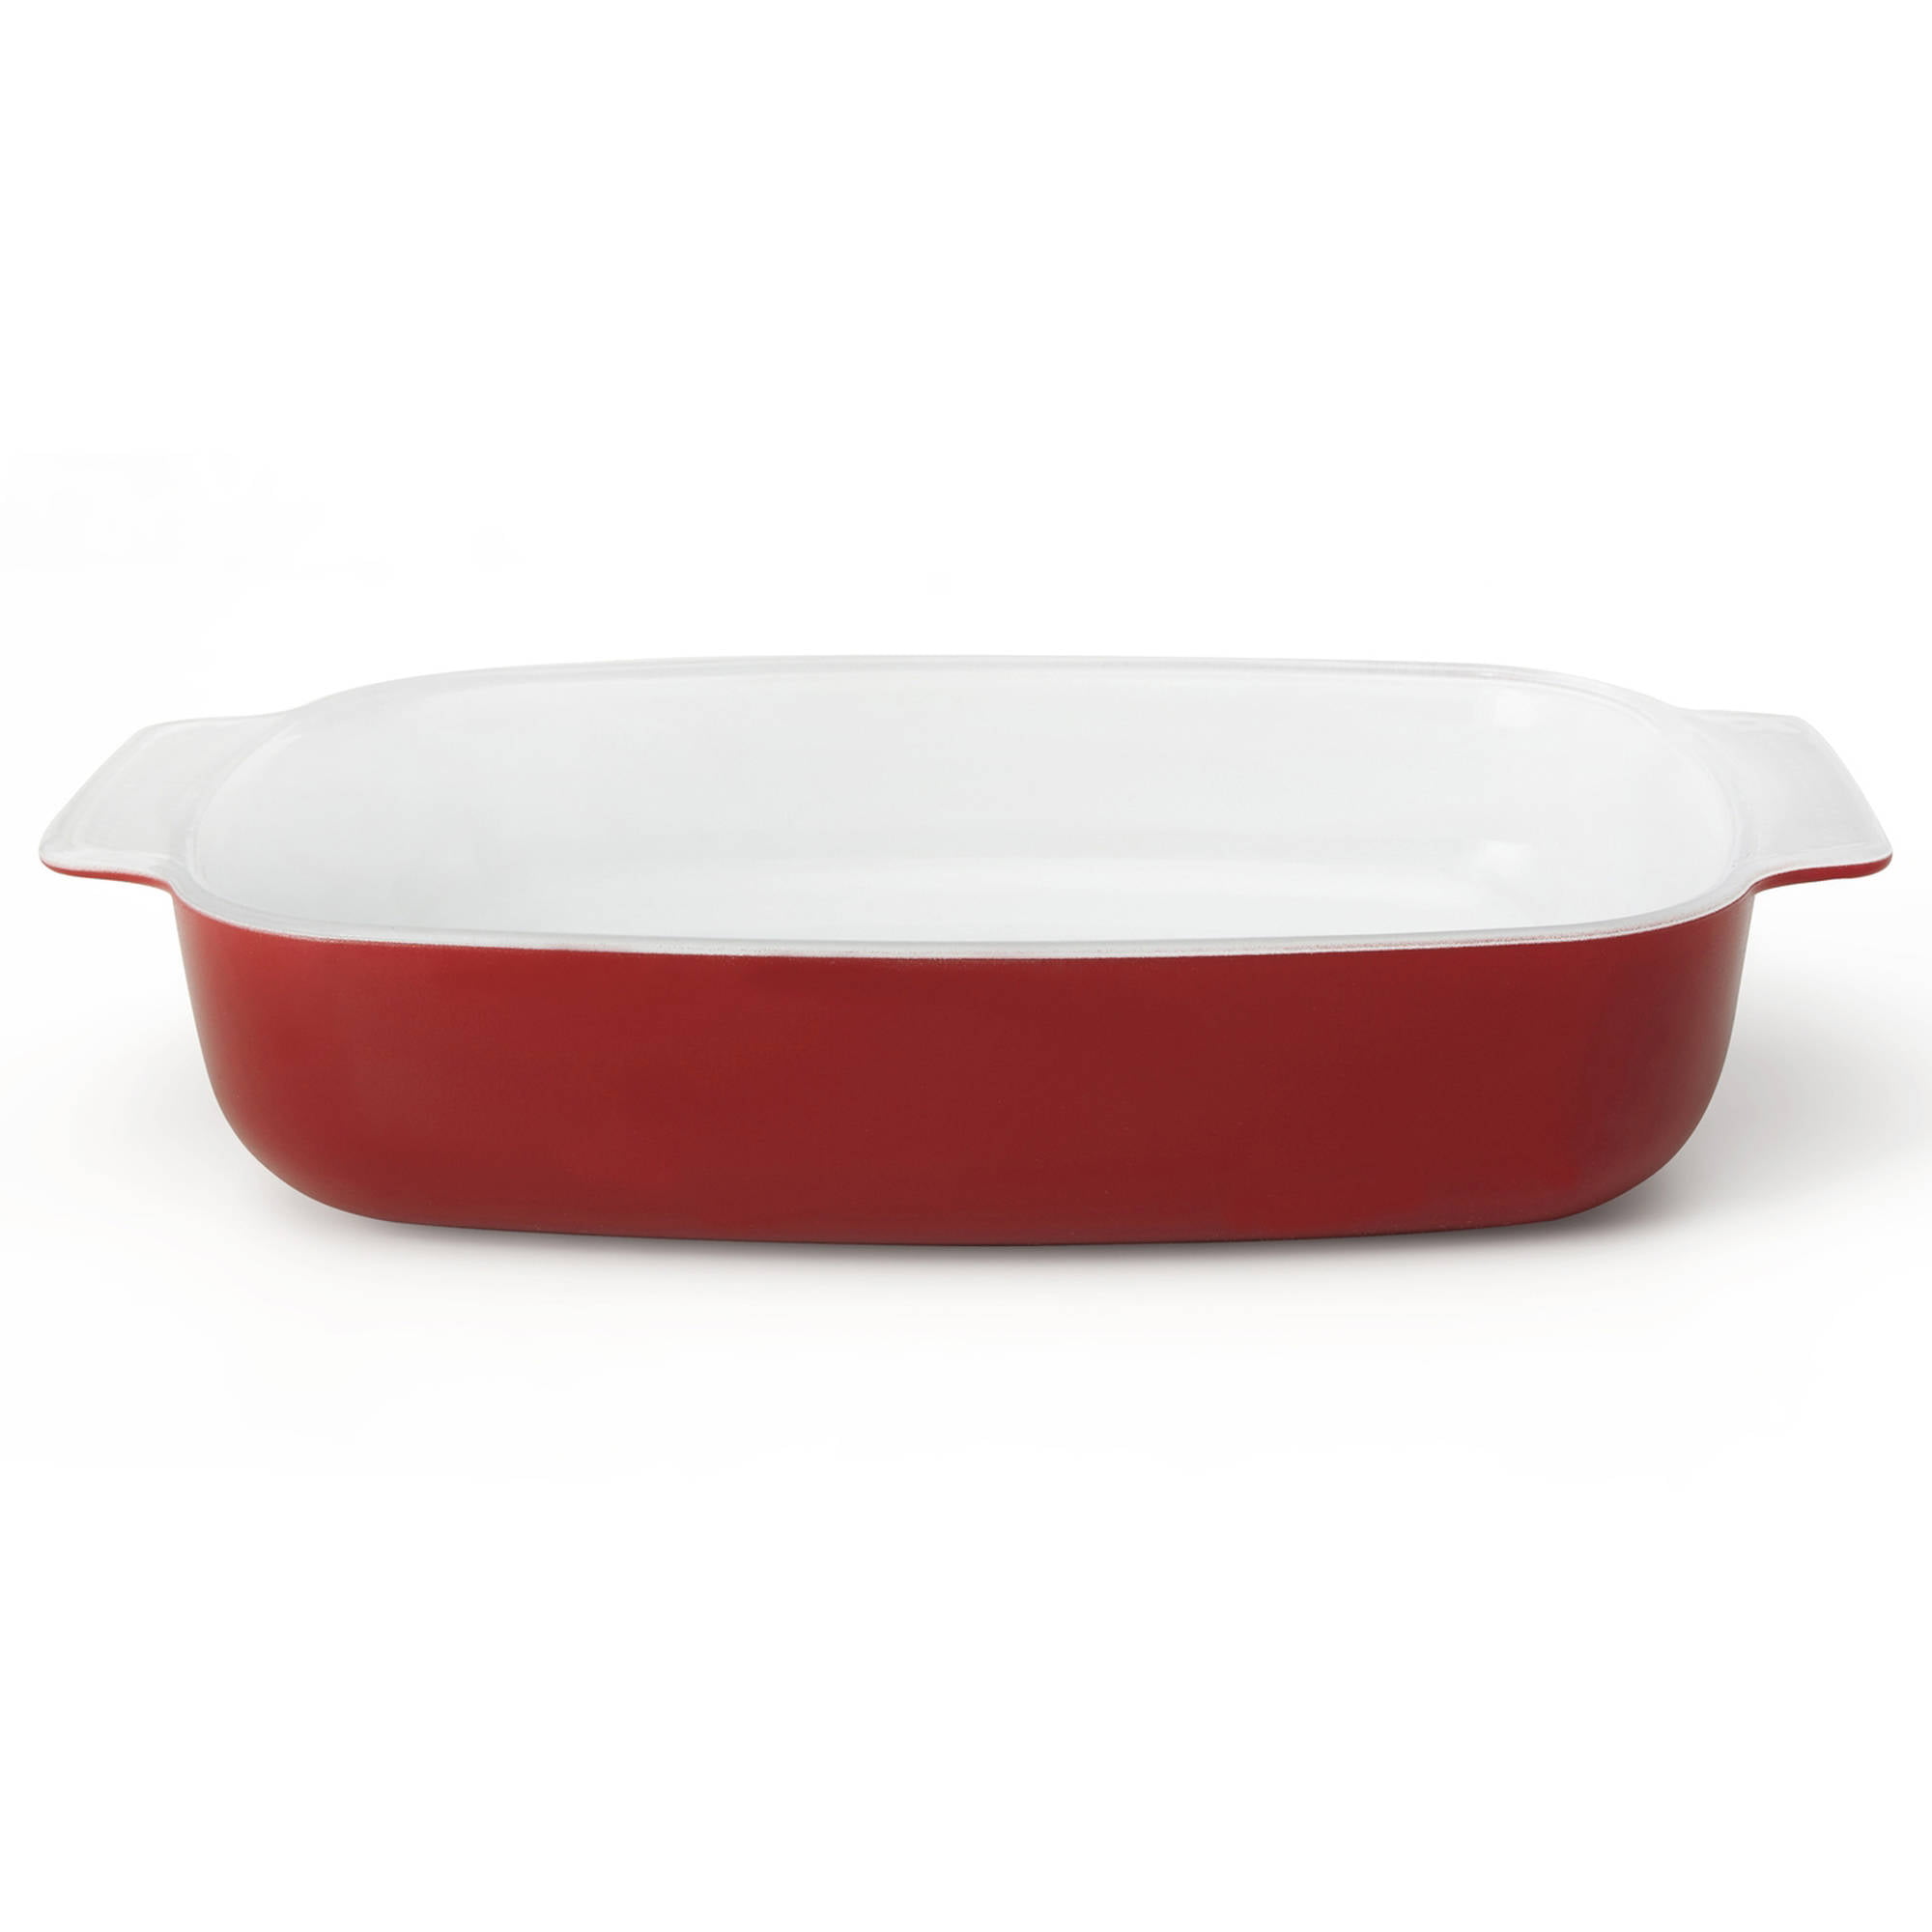 2.6-quart Baking Dish Shanghai Red Details about   Creo SmartGlass Cookware 